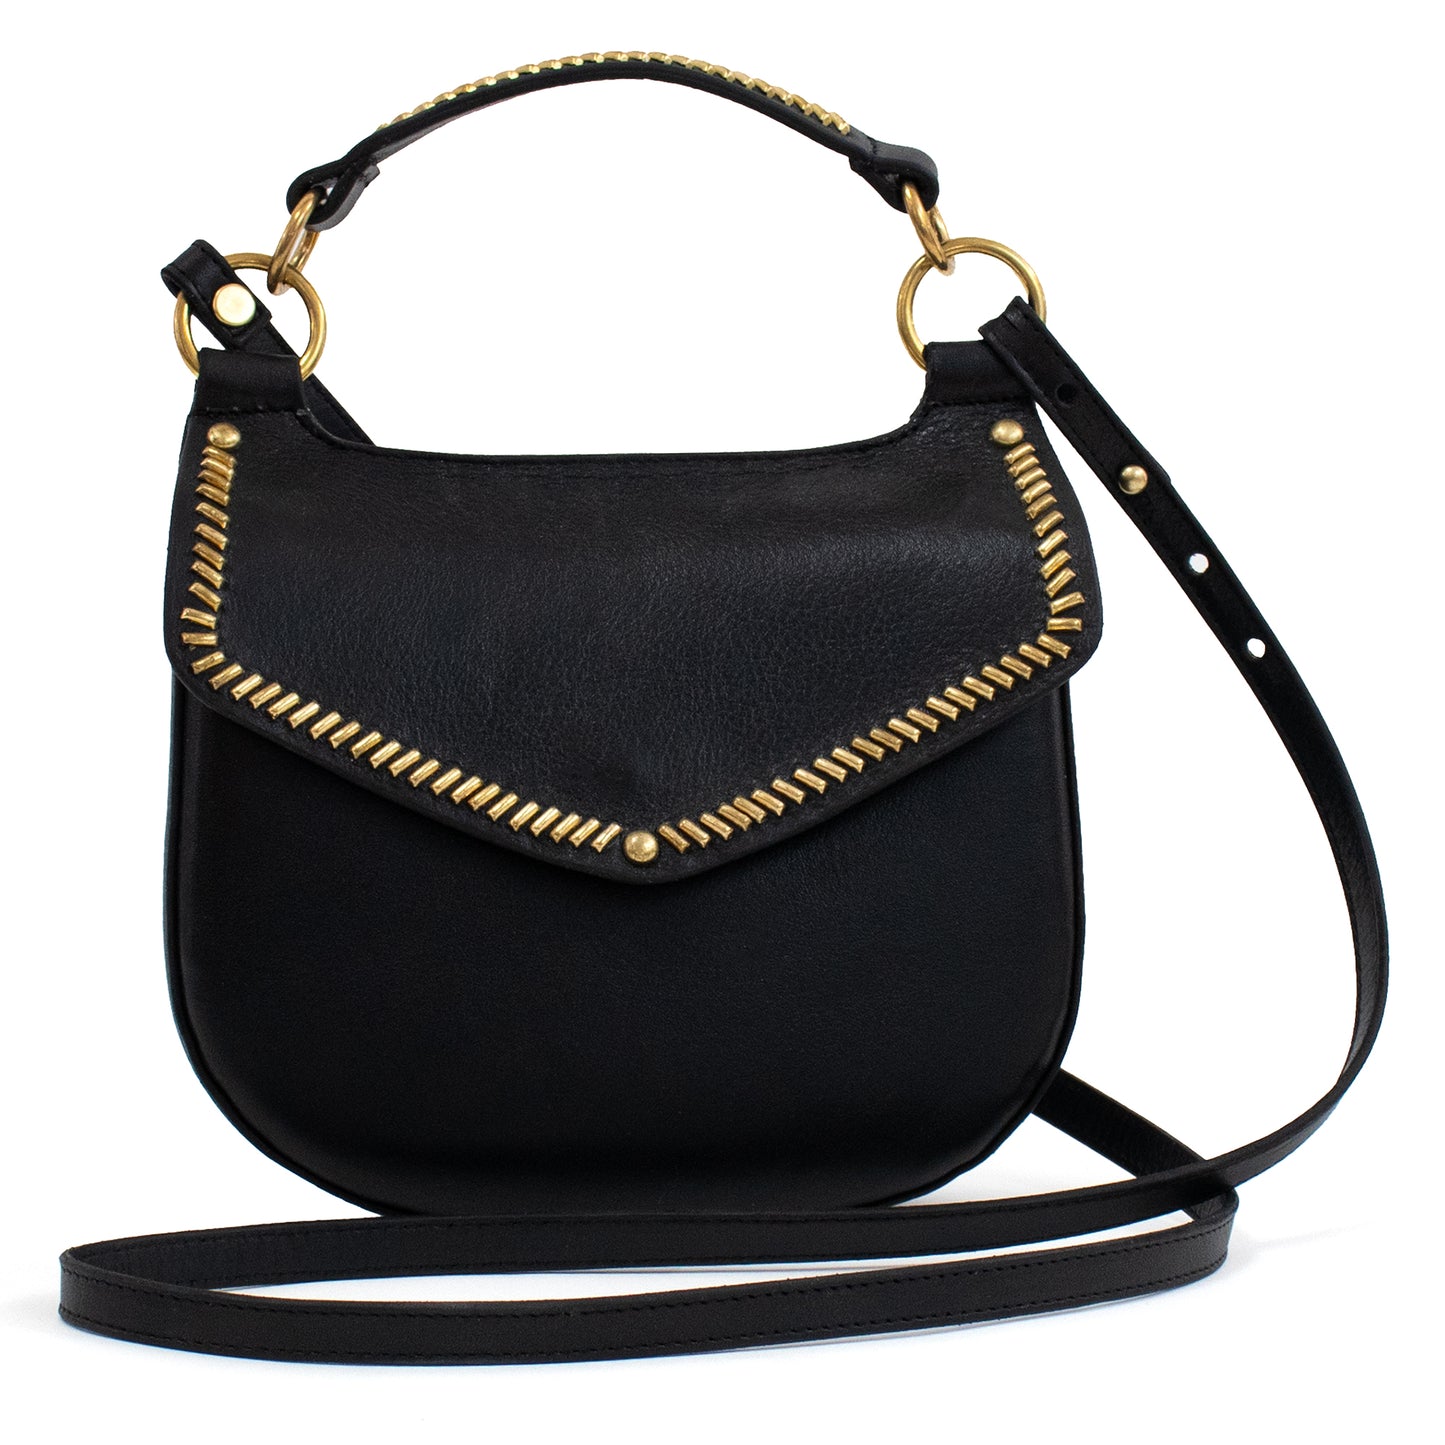 Luz Convertible Belt Bag "New Size"